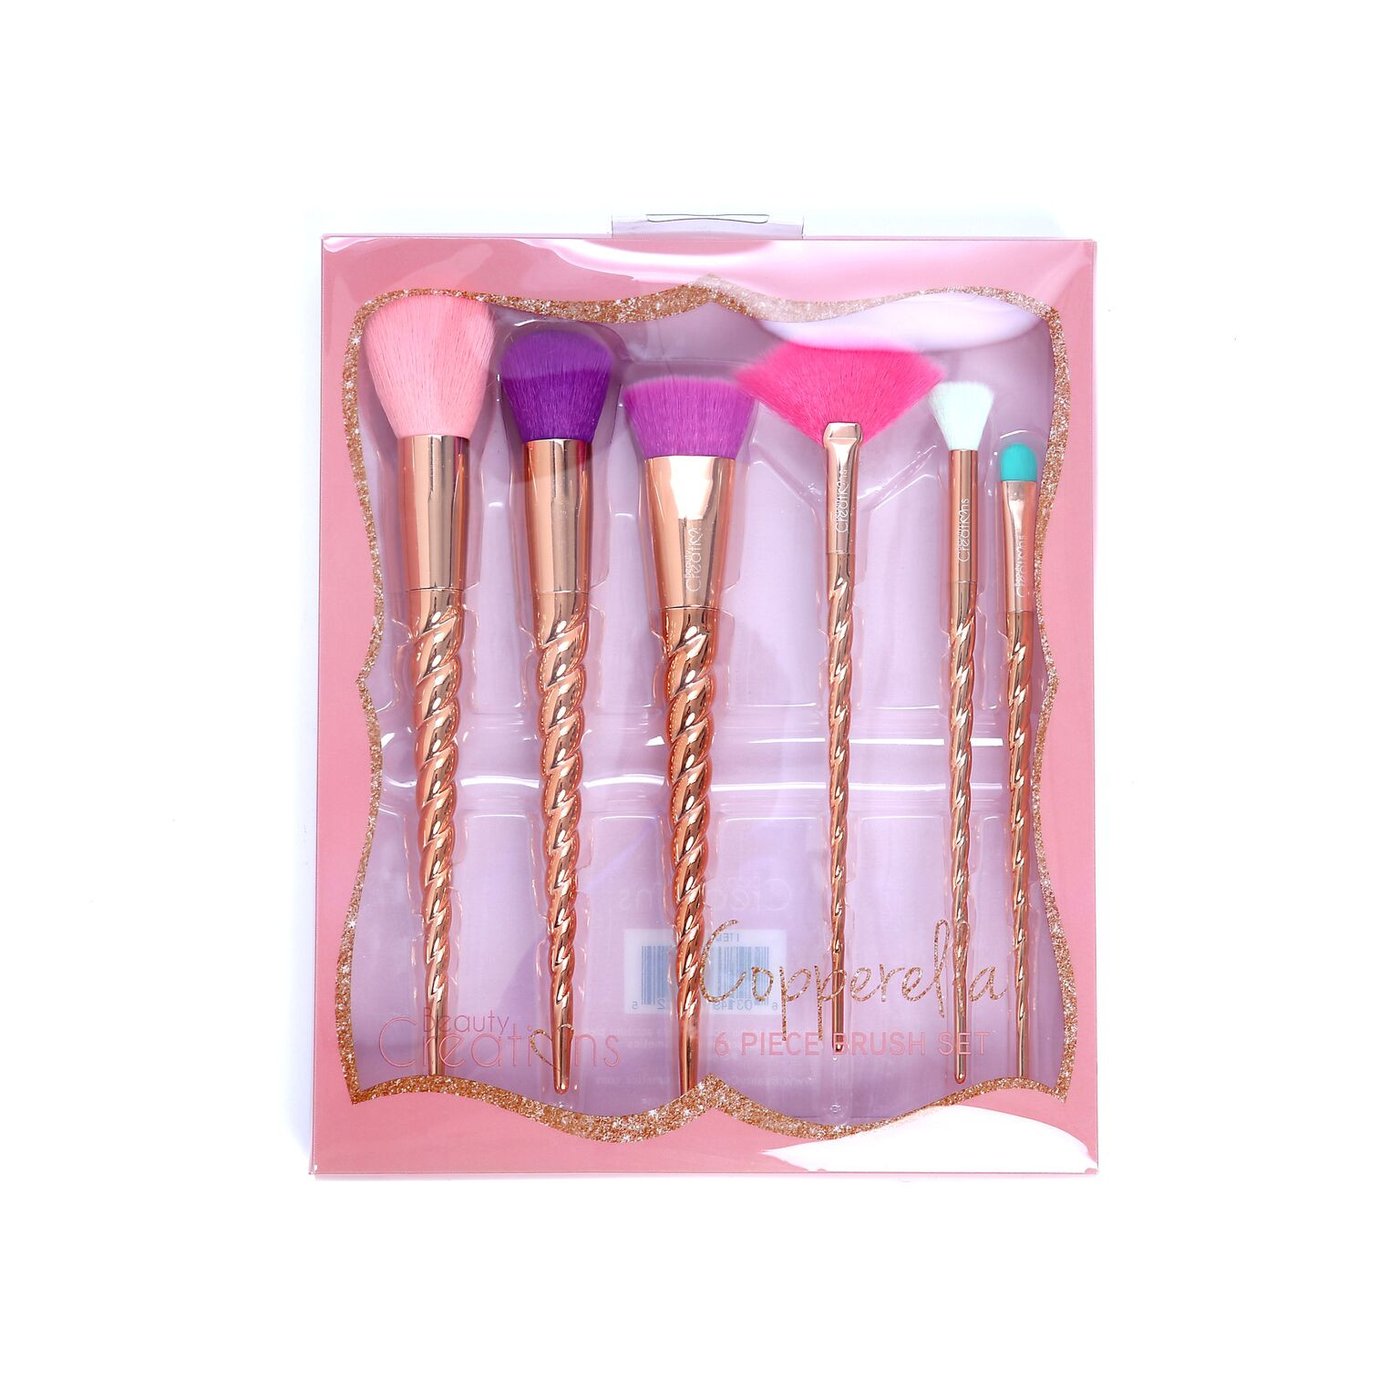 Beauty Creations - Copperella 6 Piece Makeup Brush Set